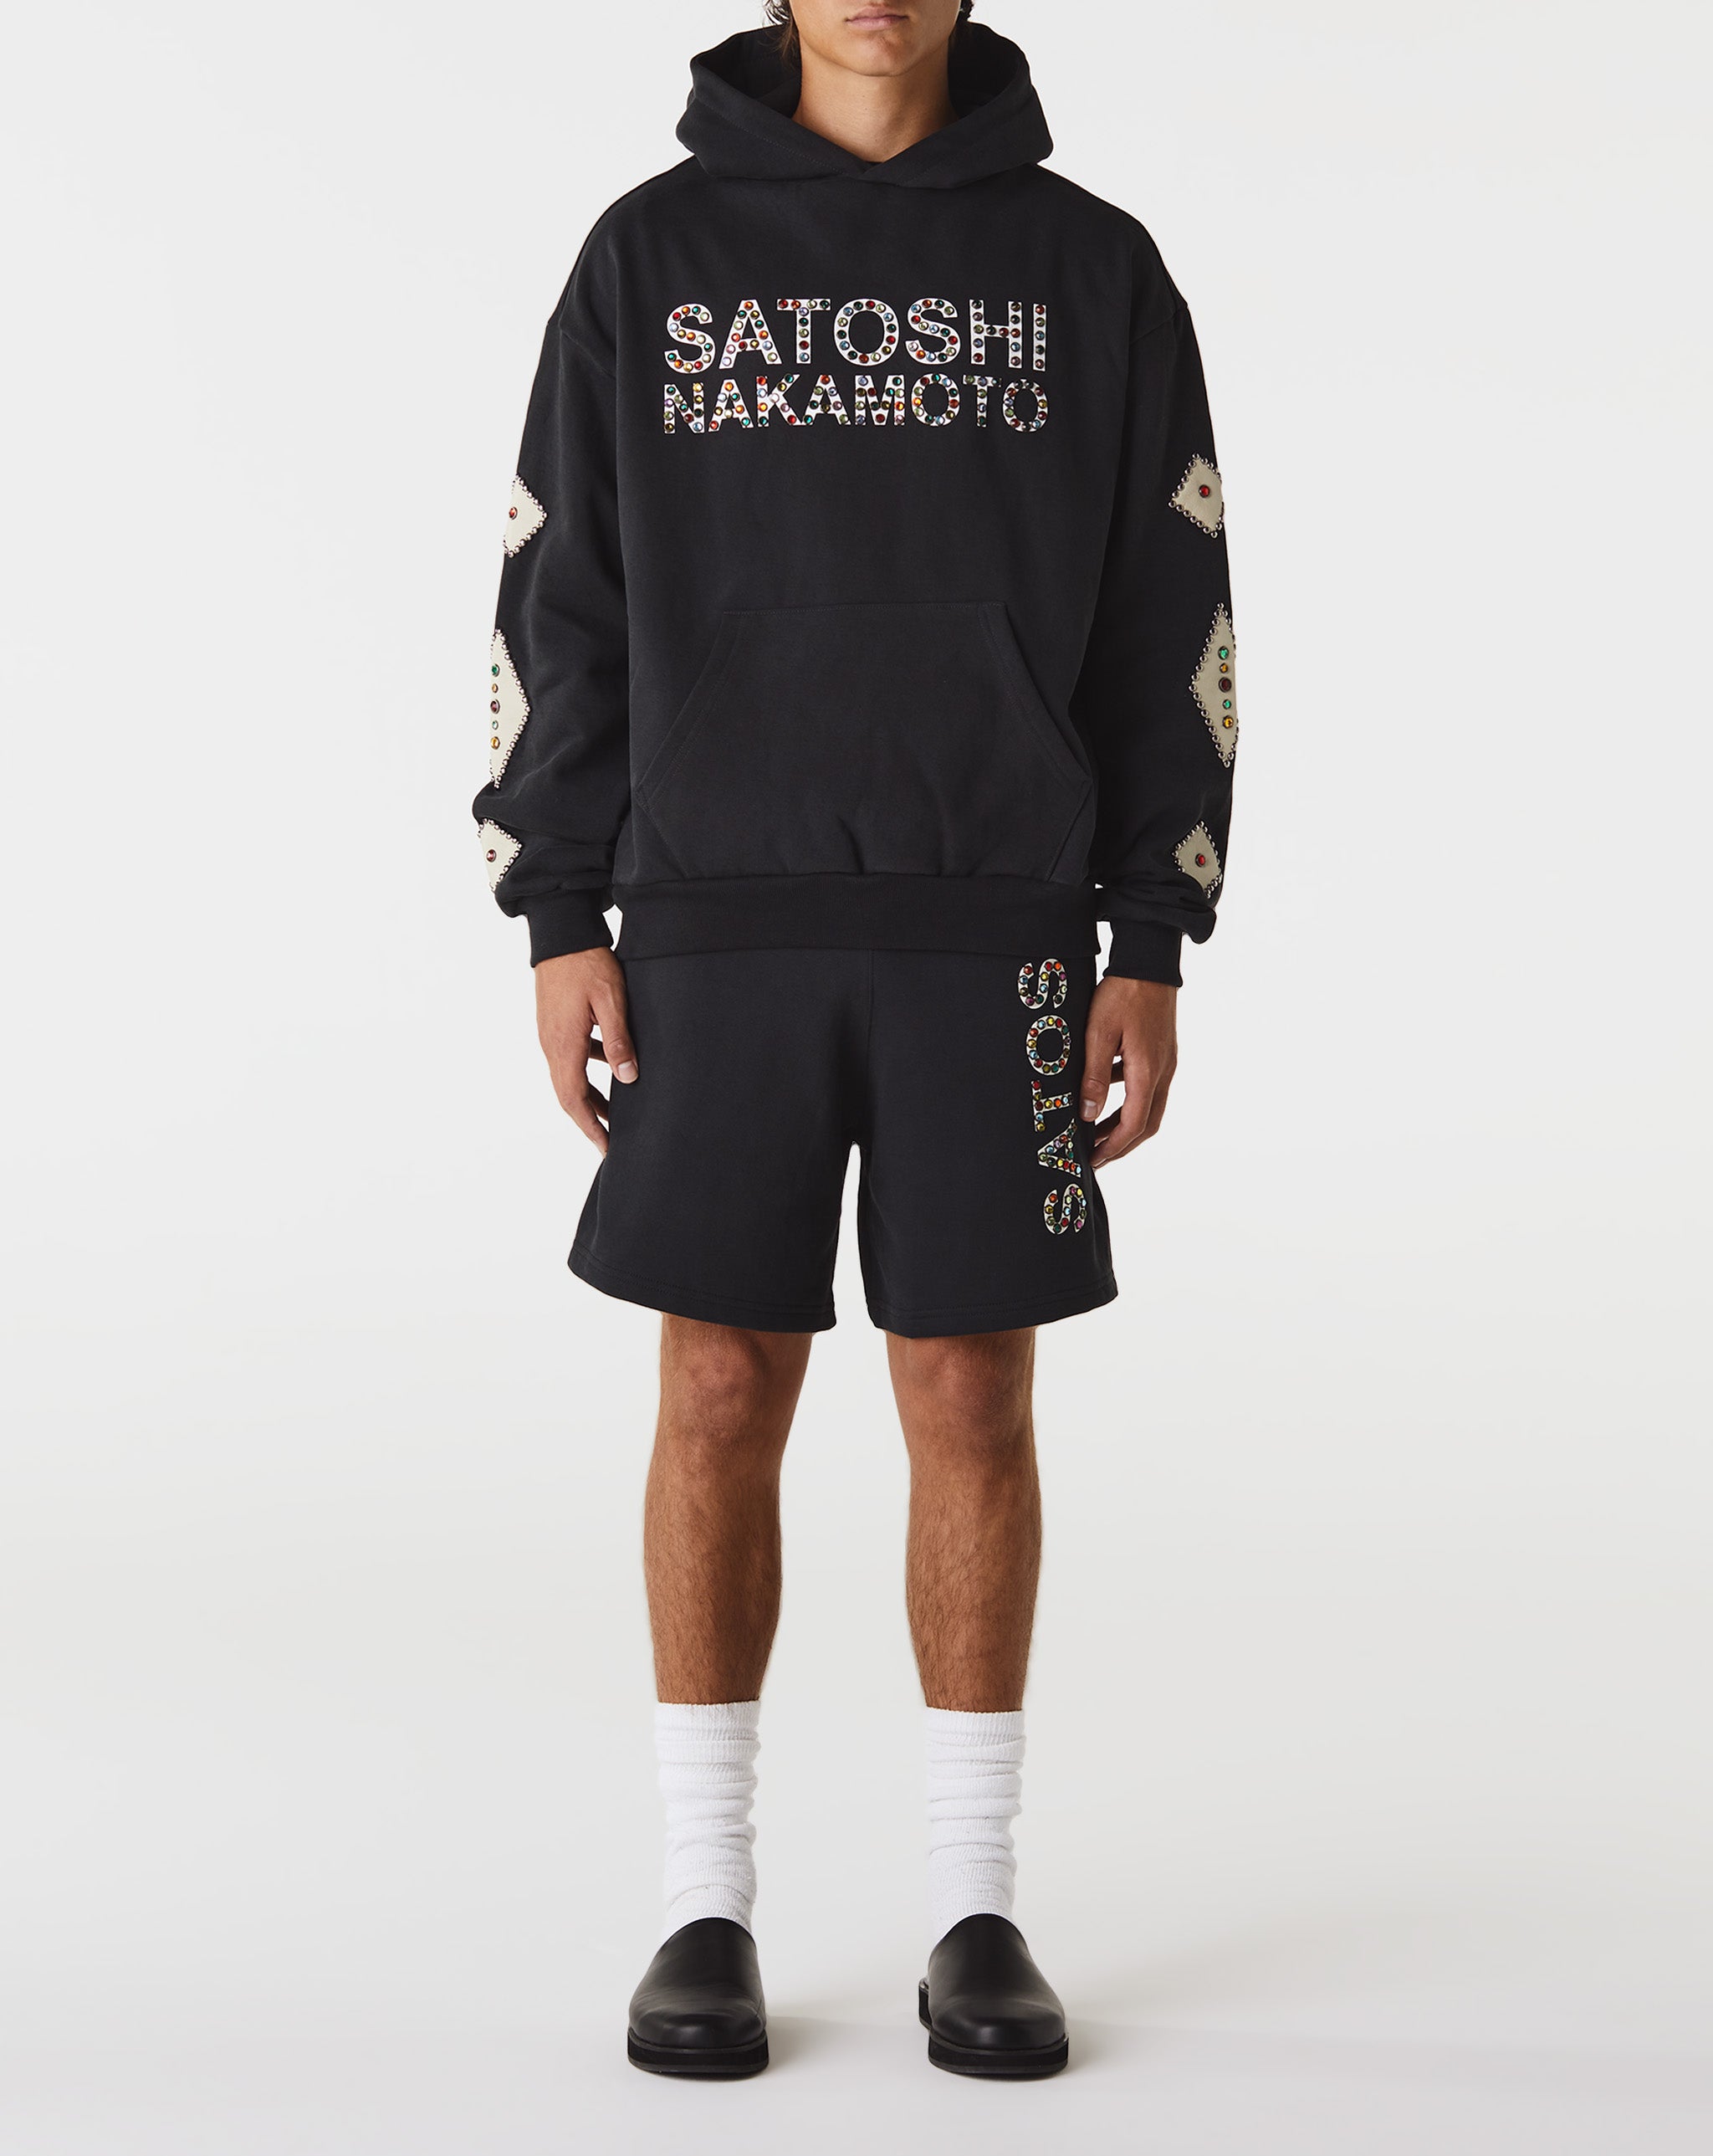 Satoshi Nakamoto s leather jacket  - Cheap Erlebniswelt-fliegenfischen Jordan outlet